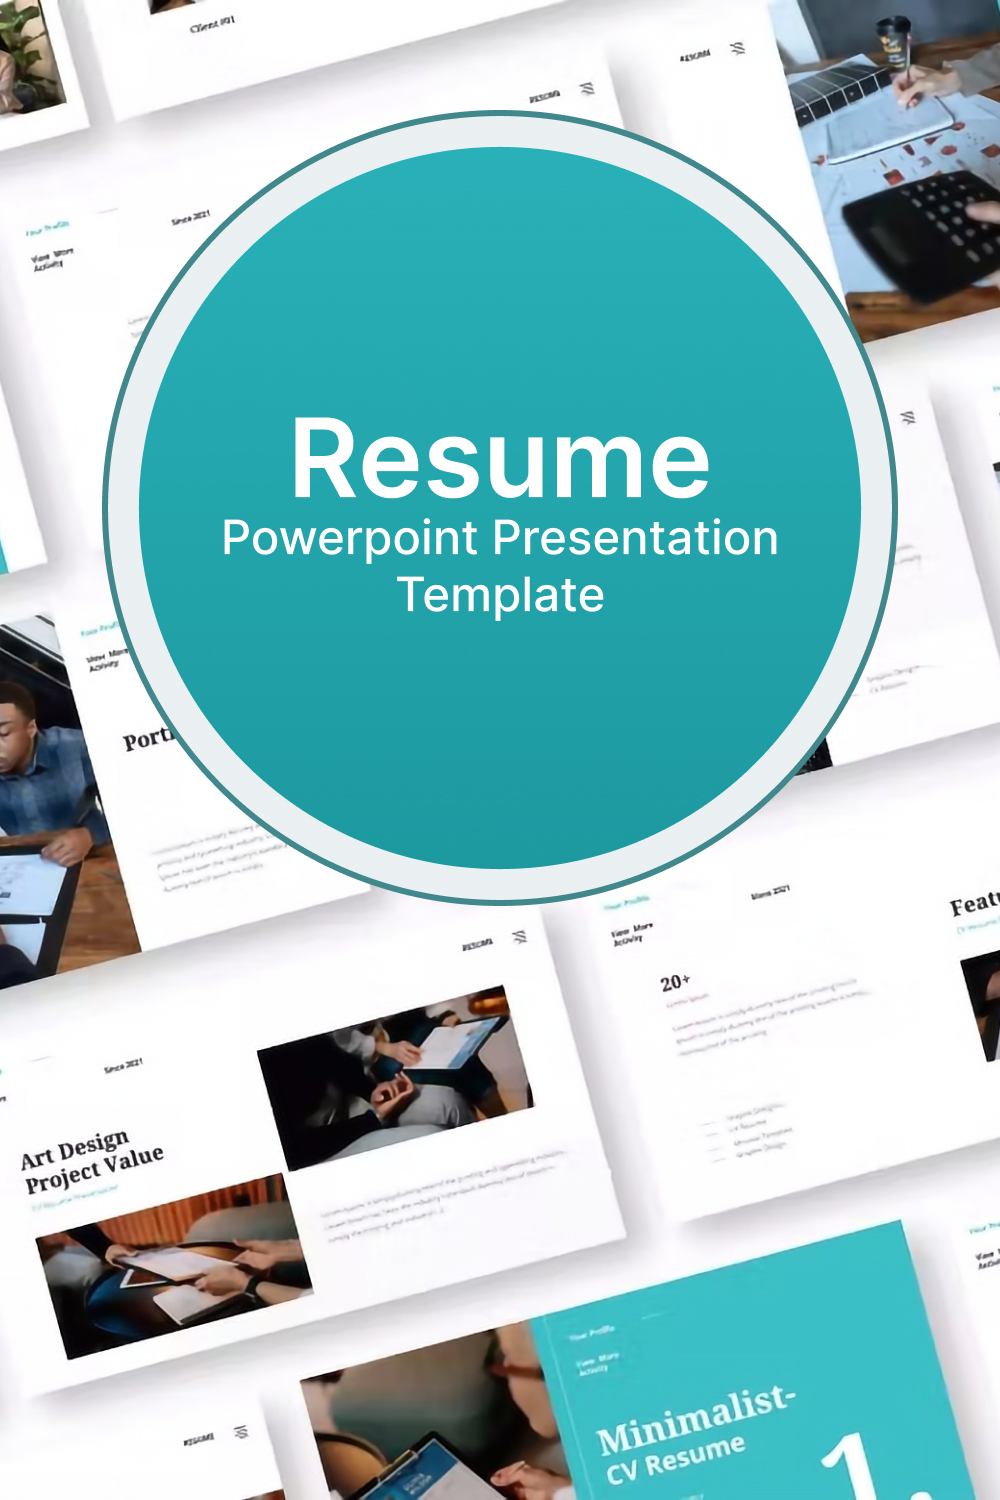 Resume powerpoint presentation template of pinterest.